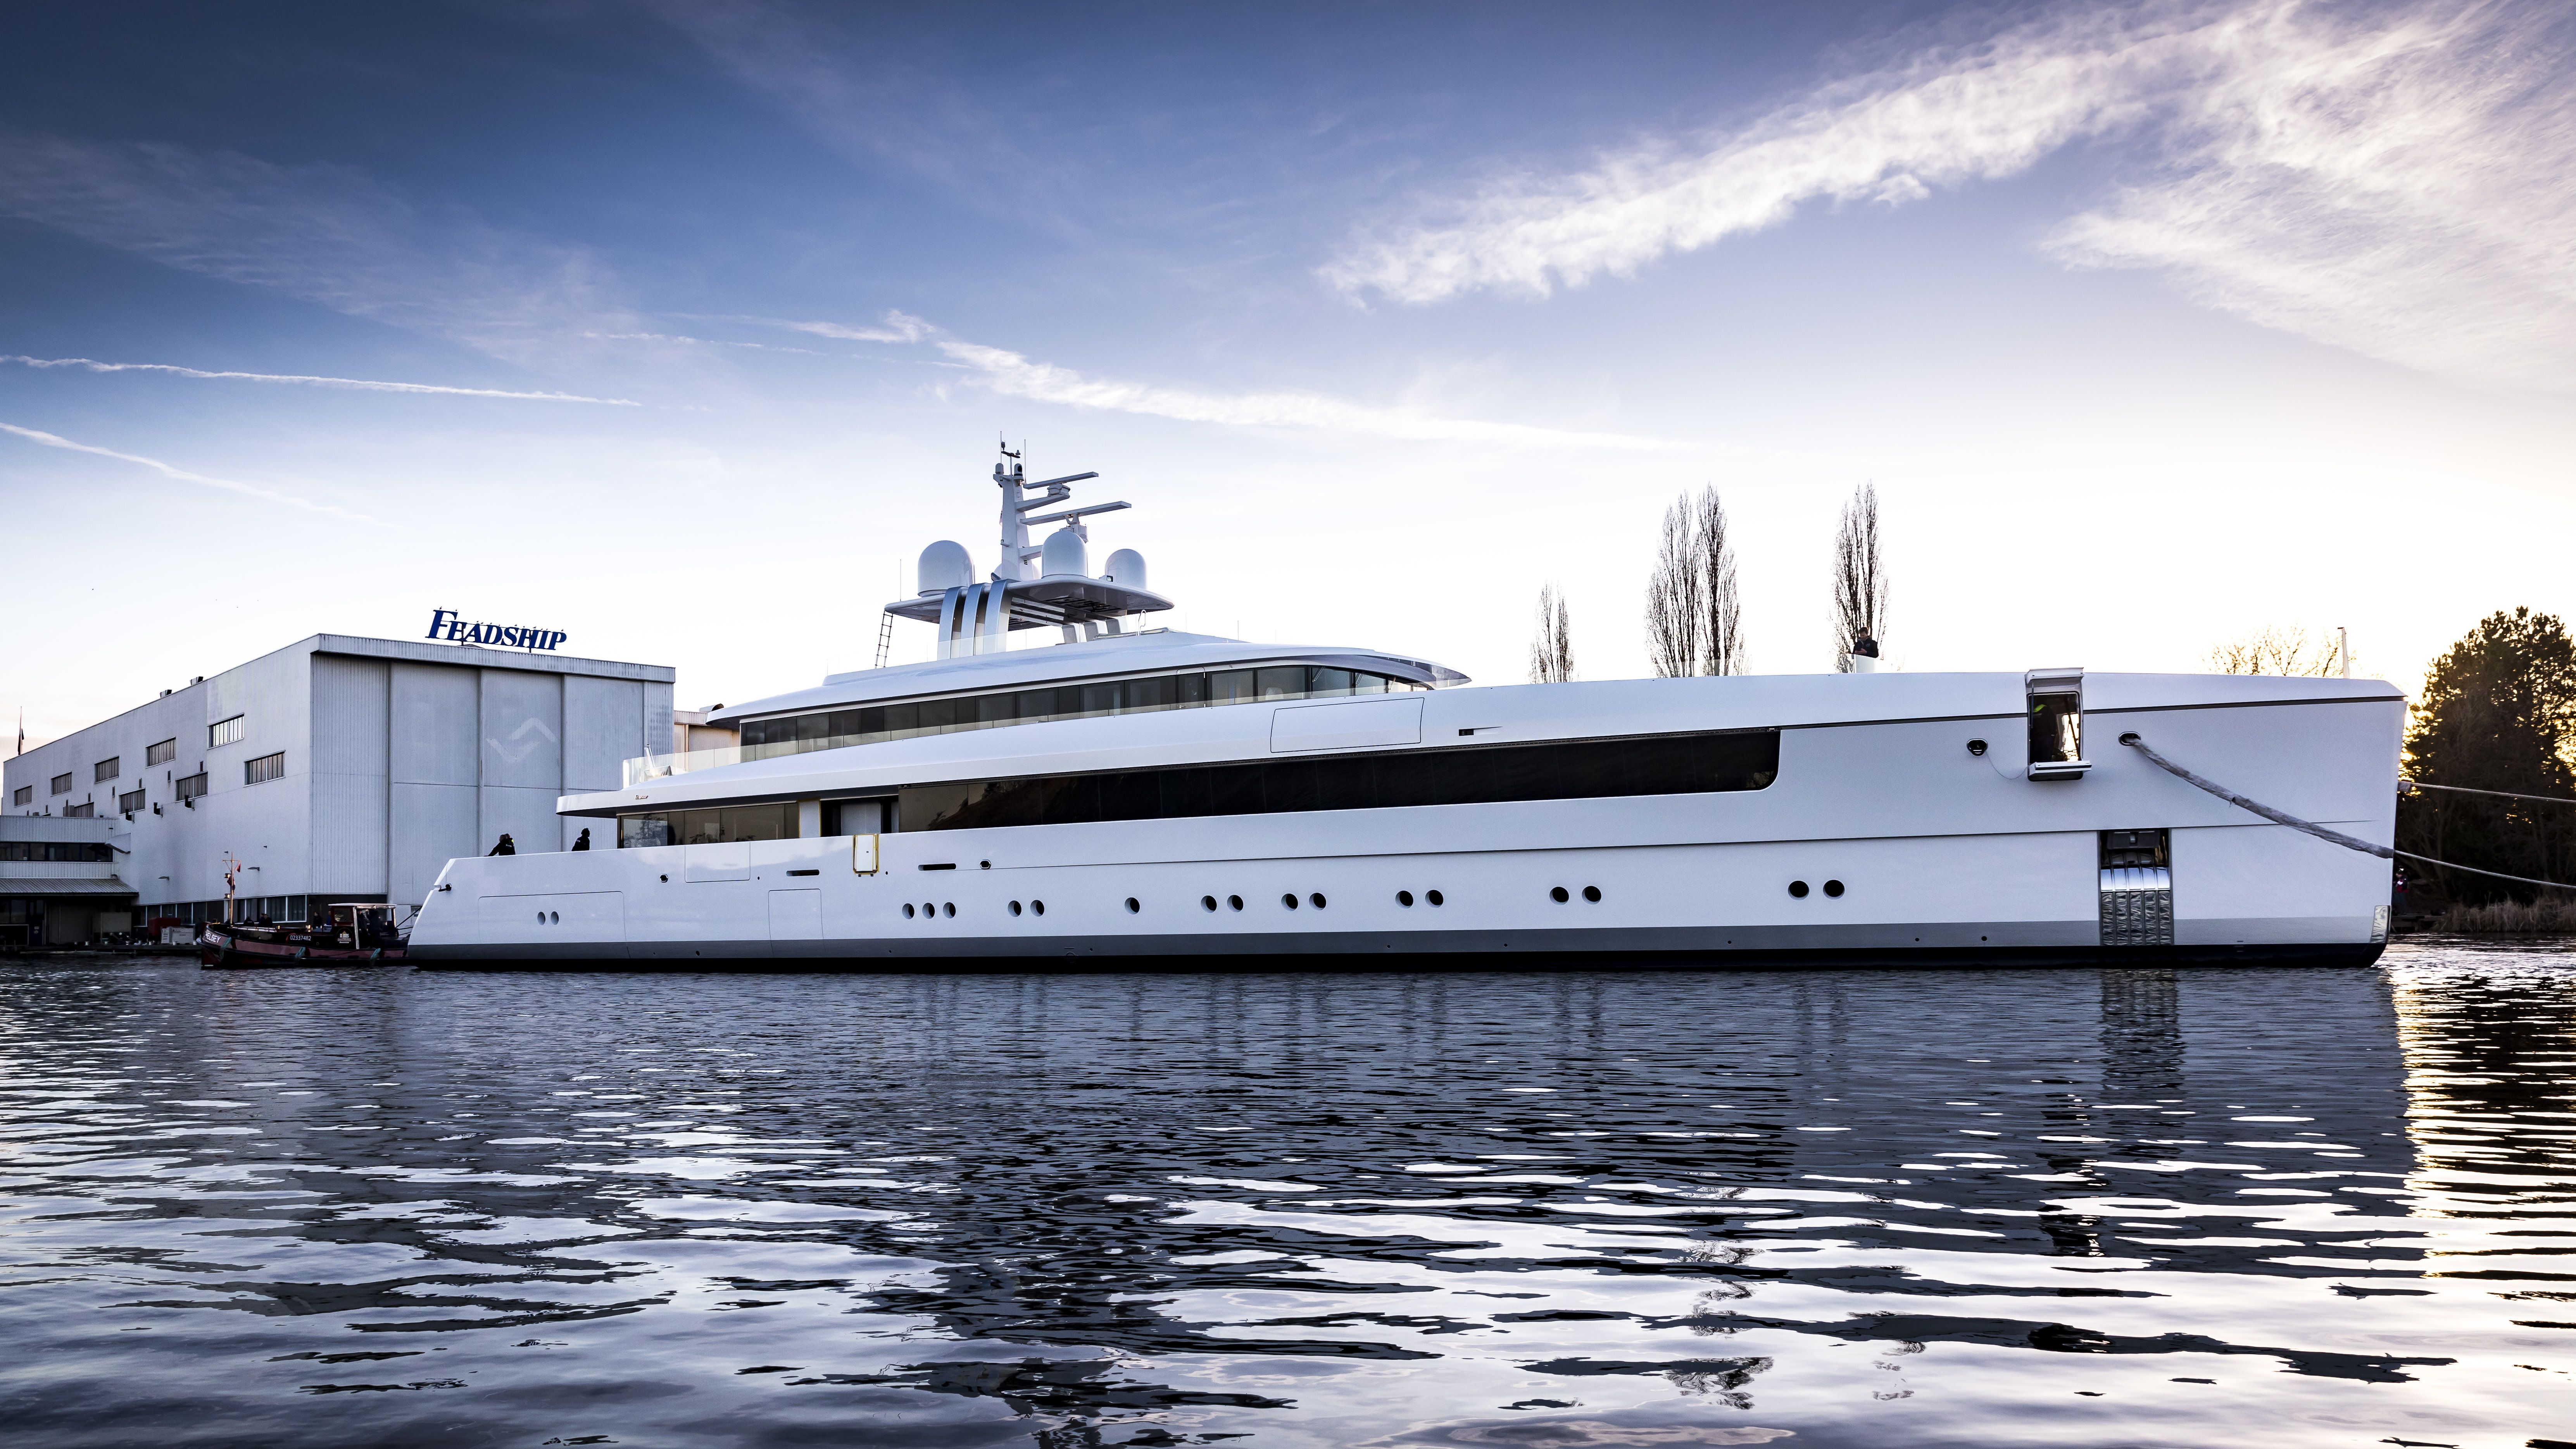 Feadship launches its second largest fully aluminium yacht 'Najiba